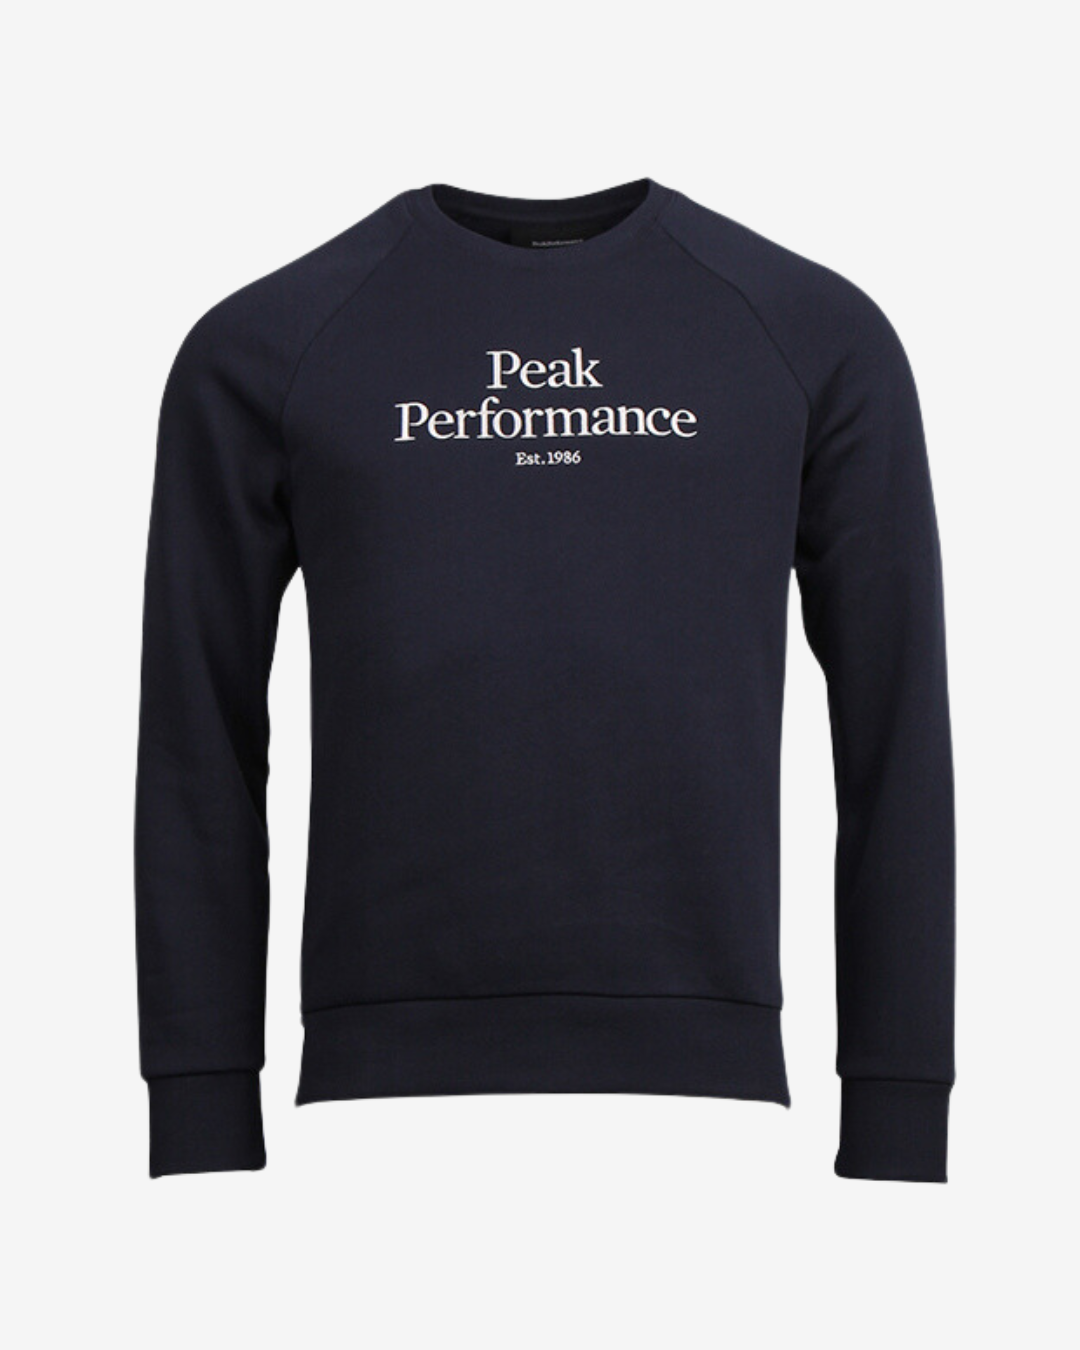 Se Peak Performance Original stor logo sweatshirt - Navy - Str. M - Modish.dk hos Modish.dk